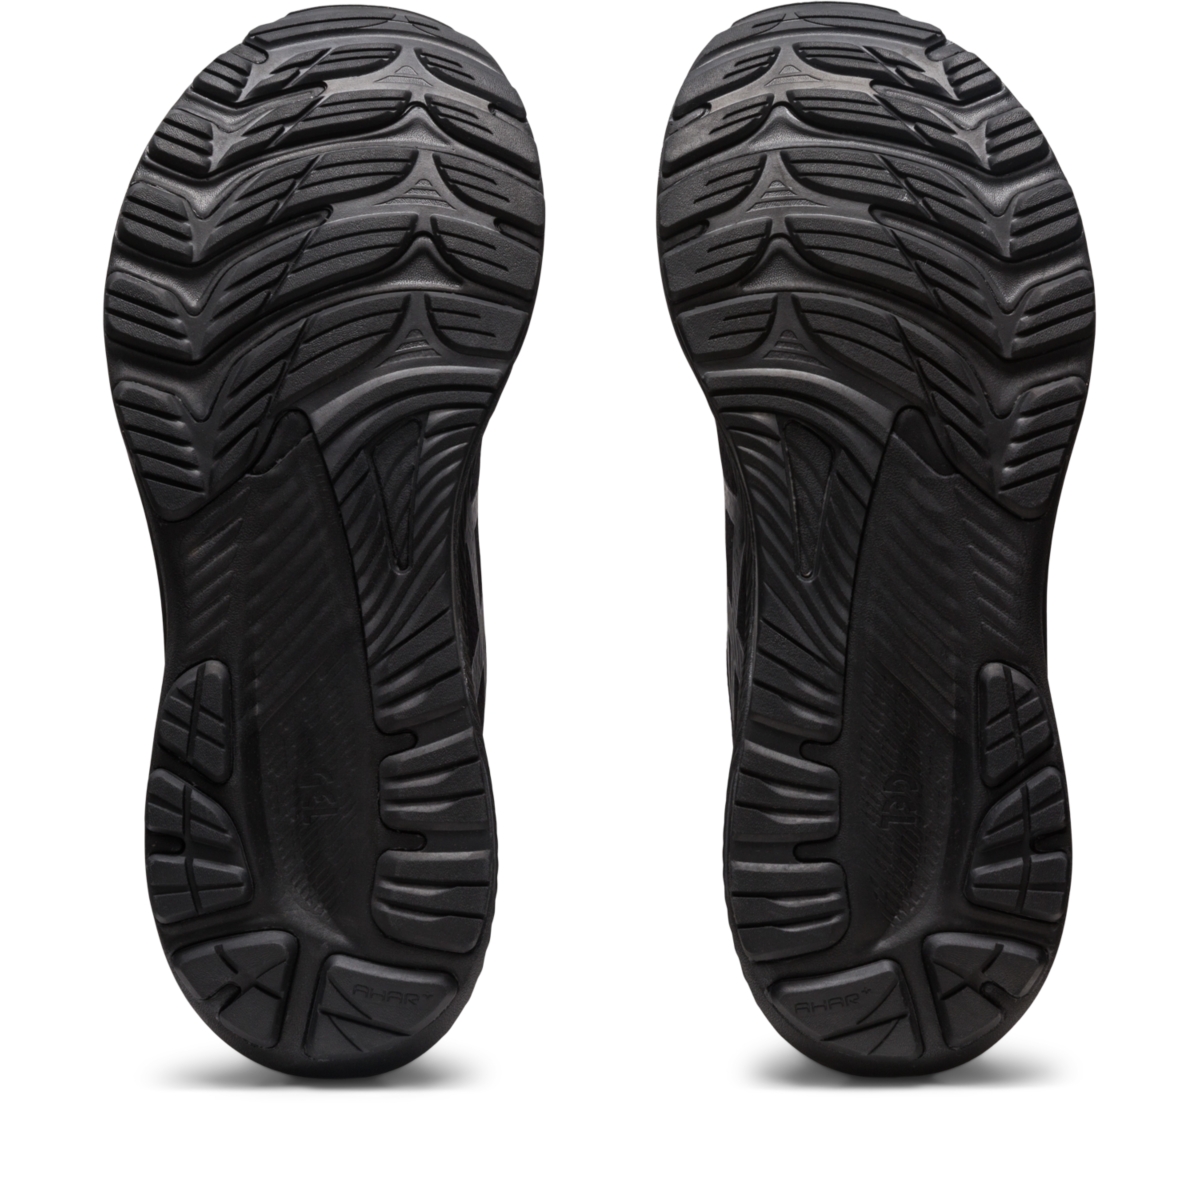 ASICS Men's GEL-KAYANO 29 2E Wide Running Shoes 1011B470 | eBay